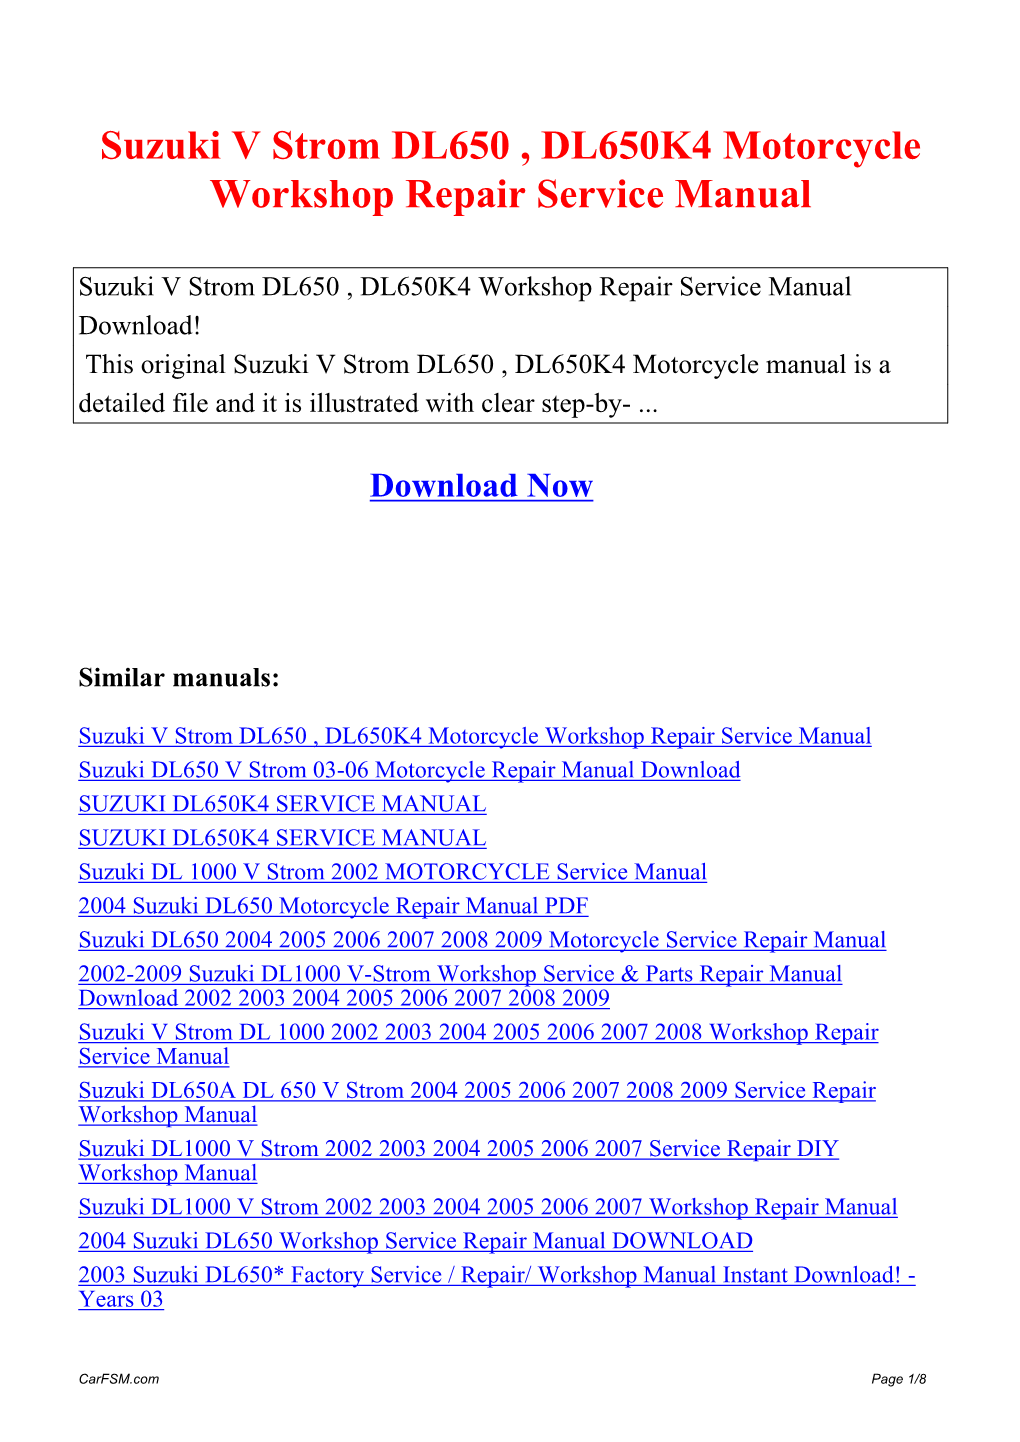 Suzuki V Strom DL650 , DL650K4 Motorcycle Workshop Repair Service Manual